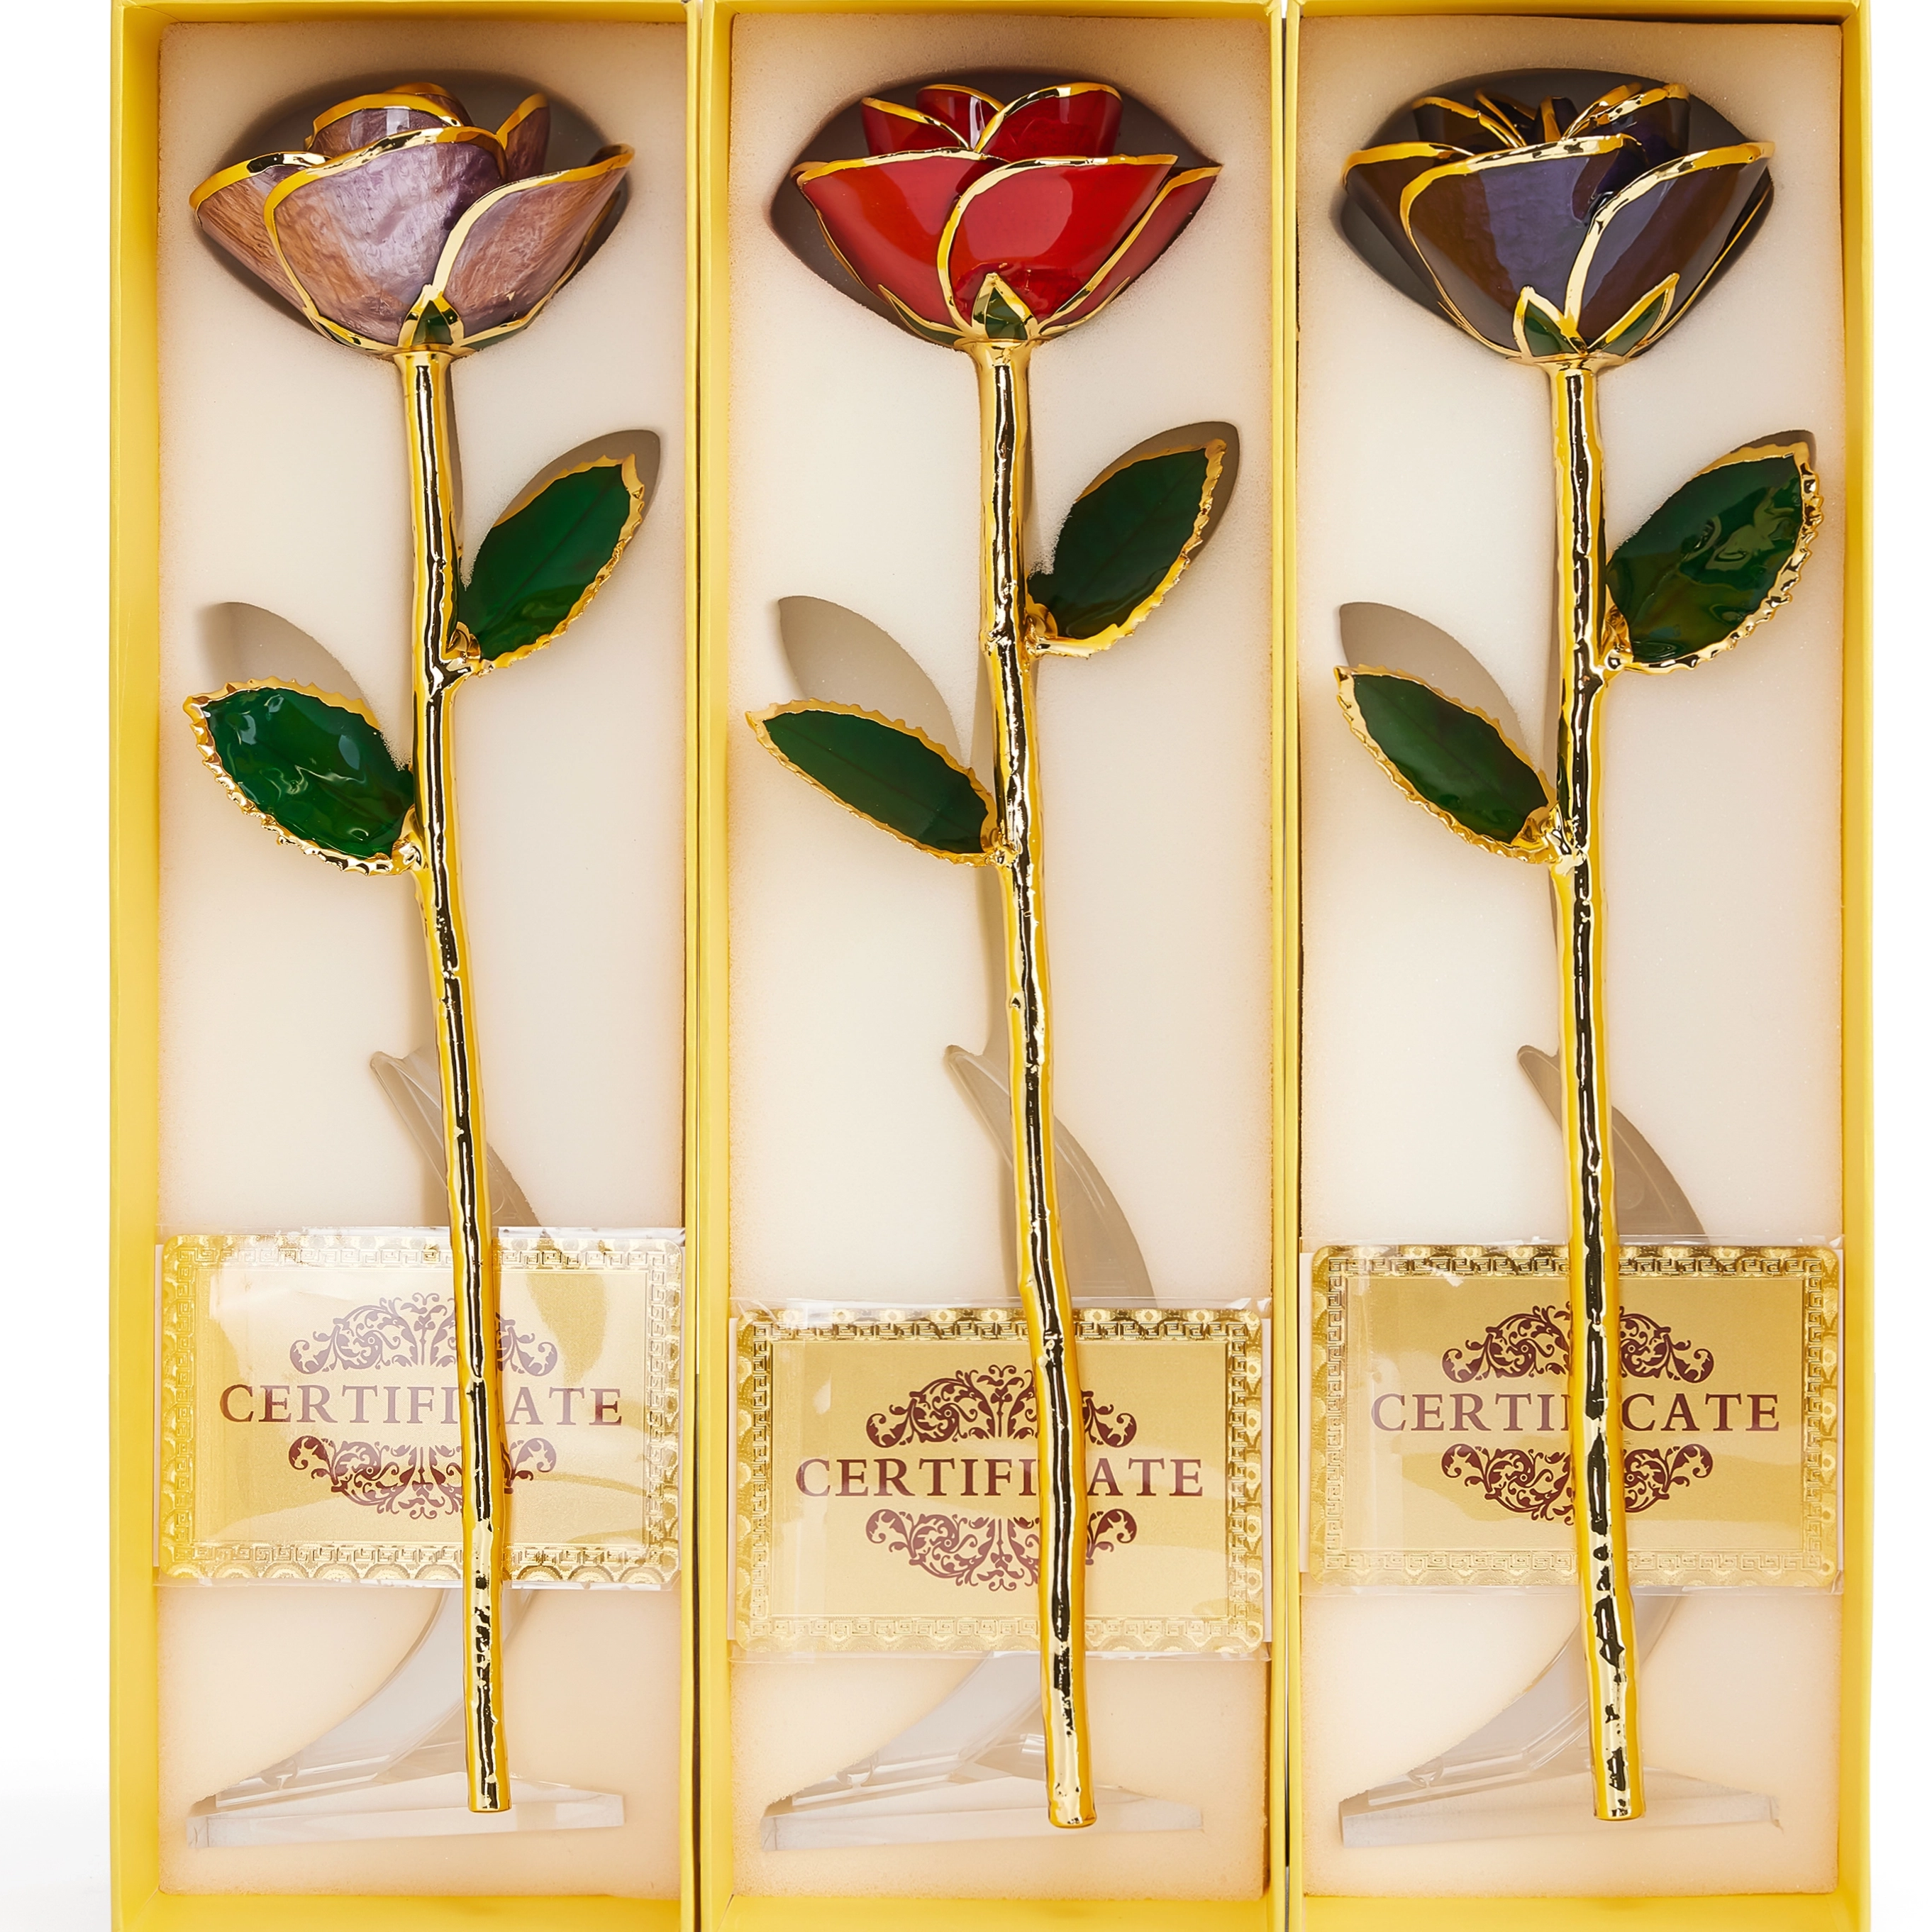 For Mother's Day, She Deserves More: 24K Gold-Dipped Roses in Lavender